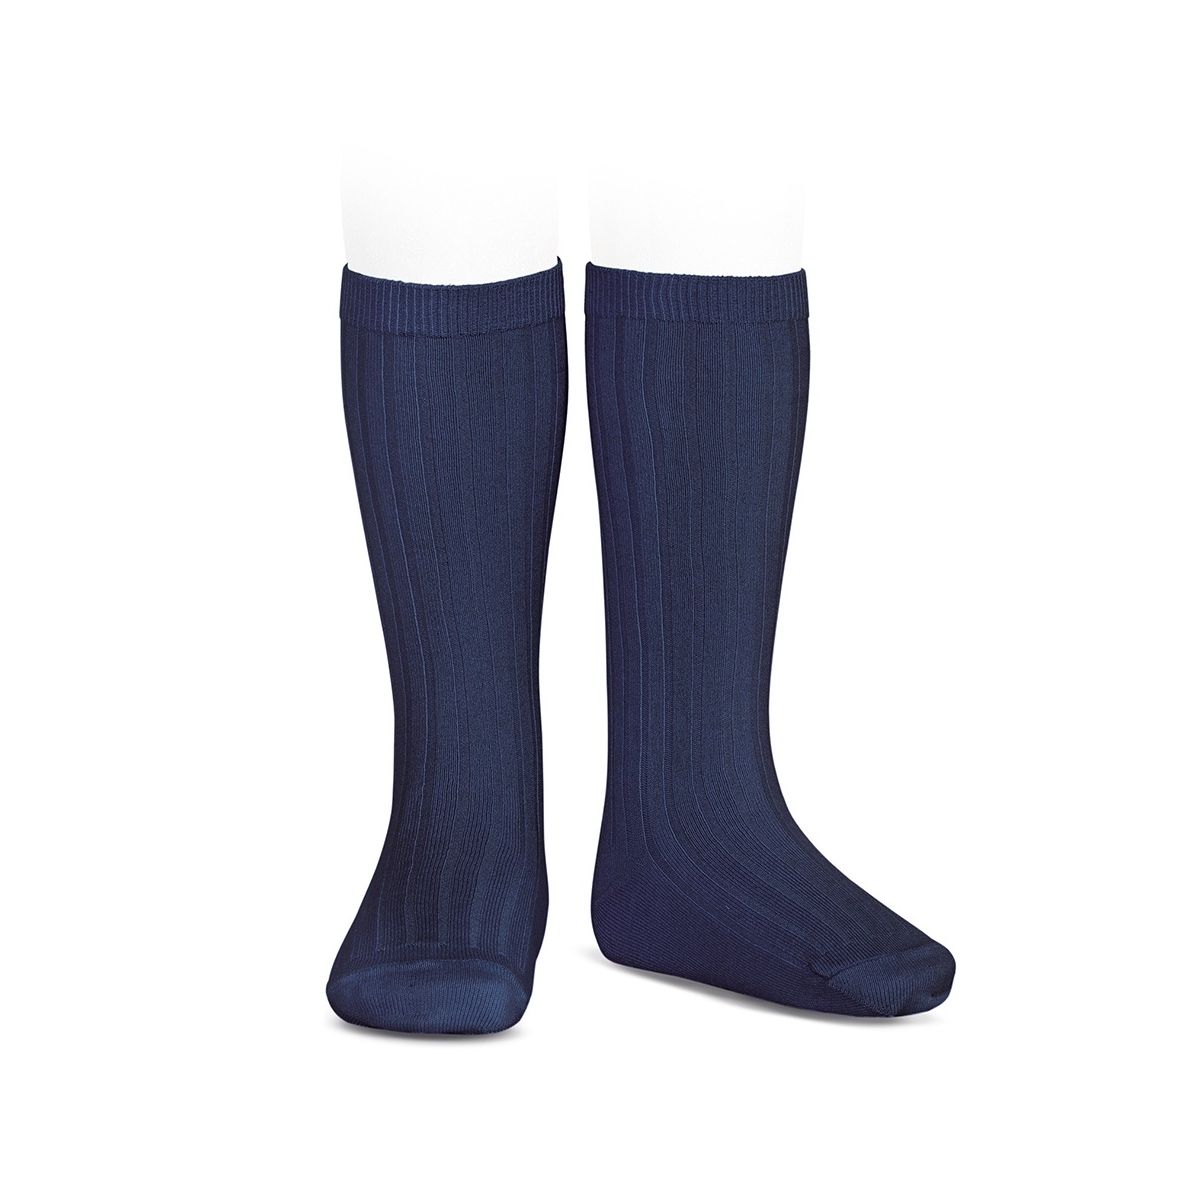 Condor - Wide Ribbed Cotton Knee High Socks navy blue - Medias